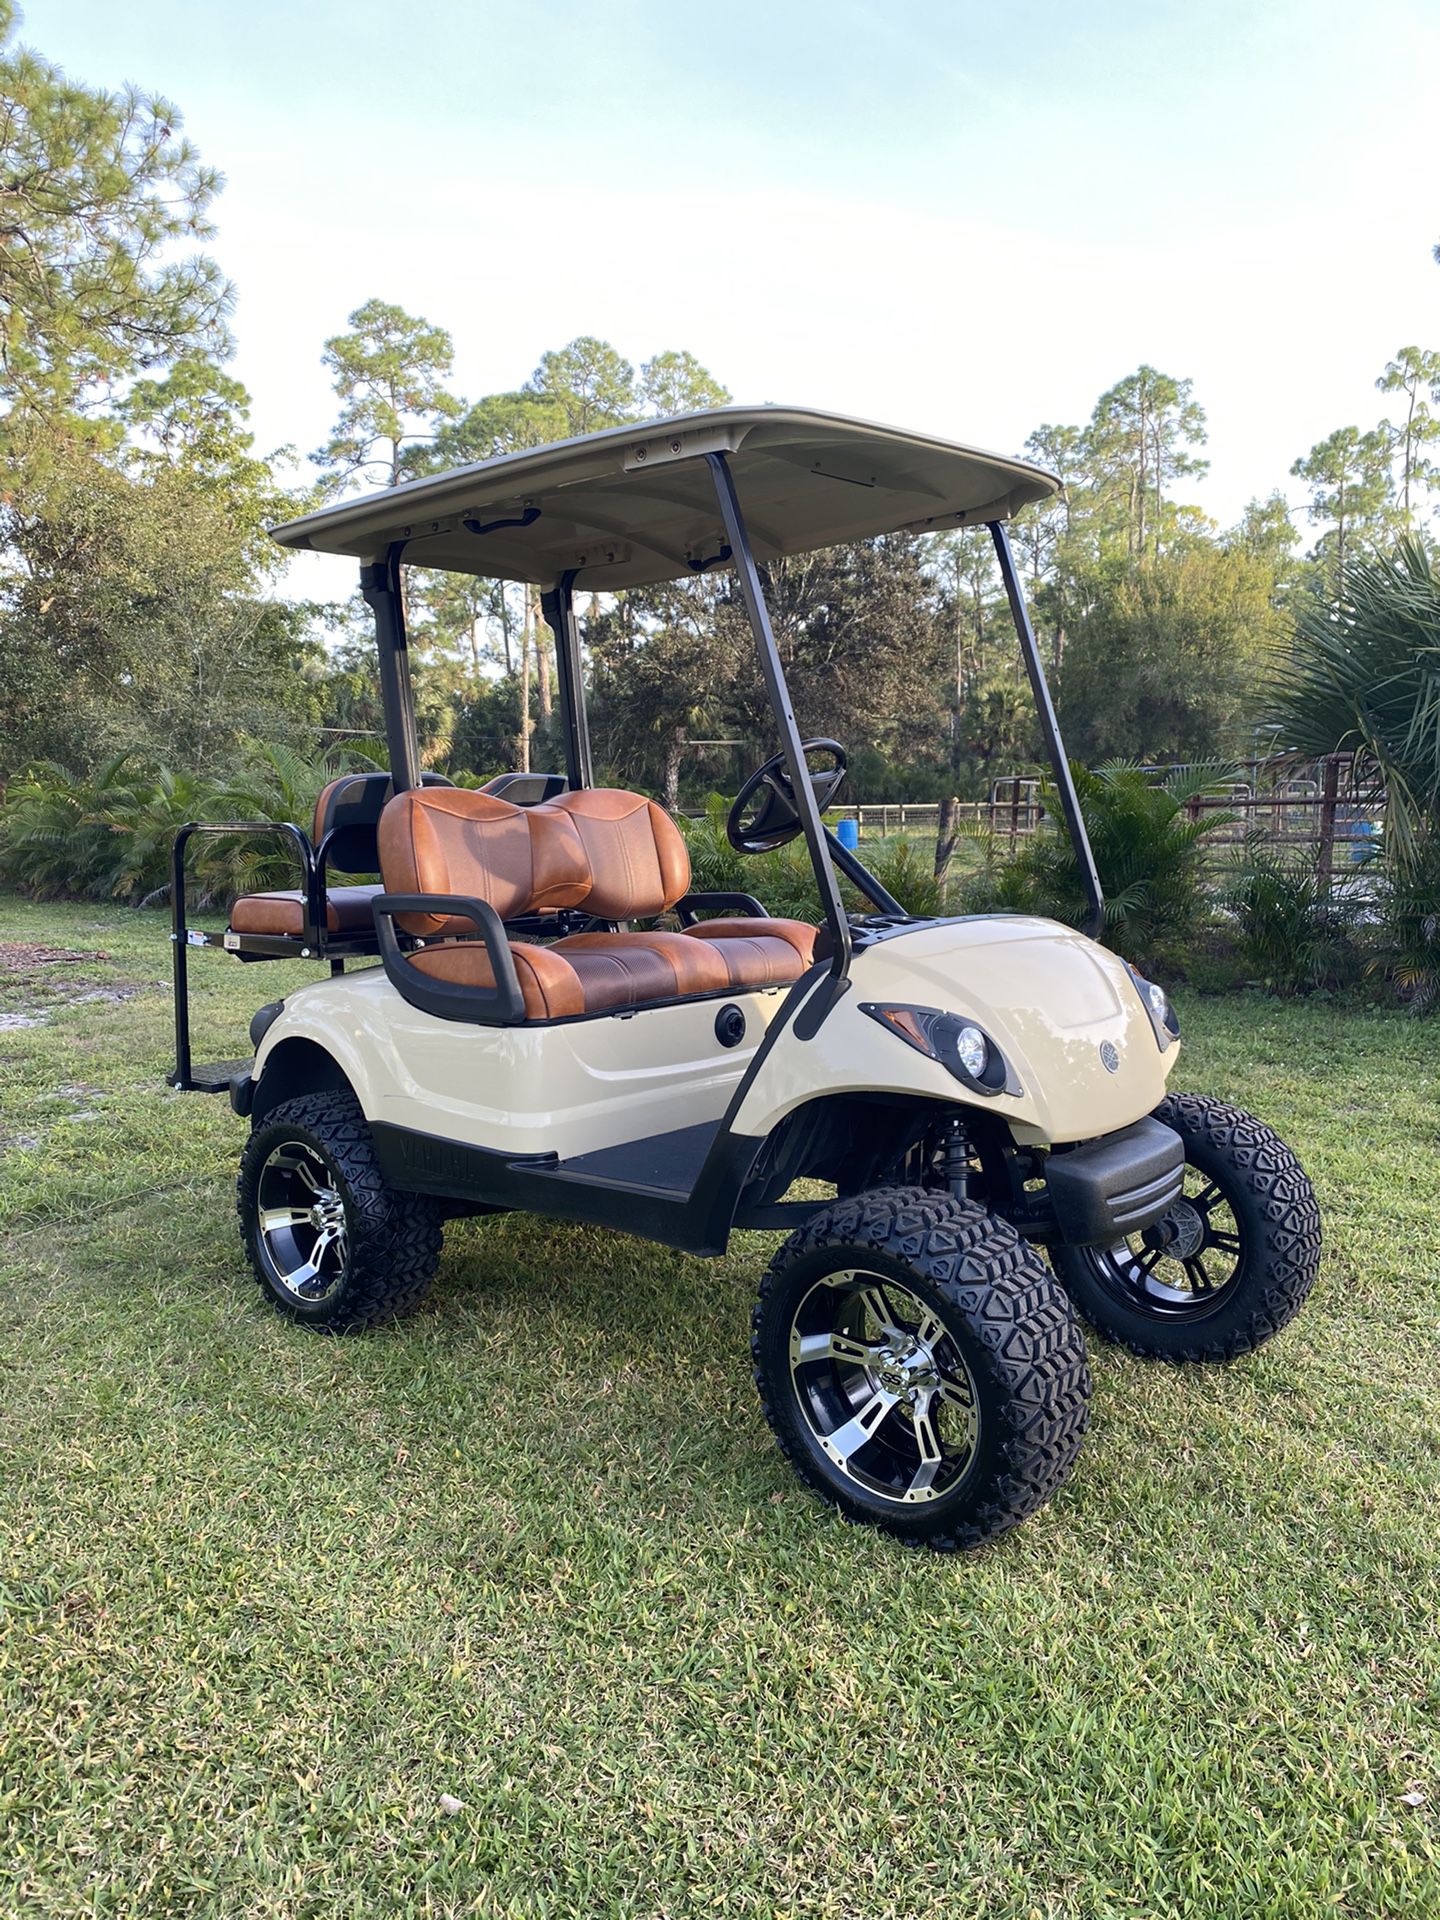 2015 Yamaha golf cart for Sale in Loxahatchee, FL - OfferUp